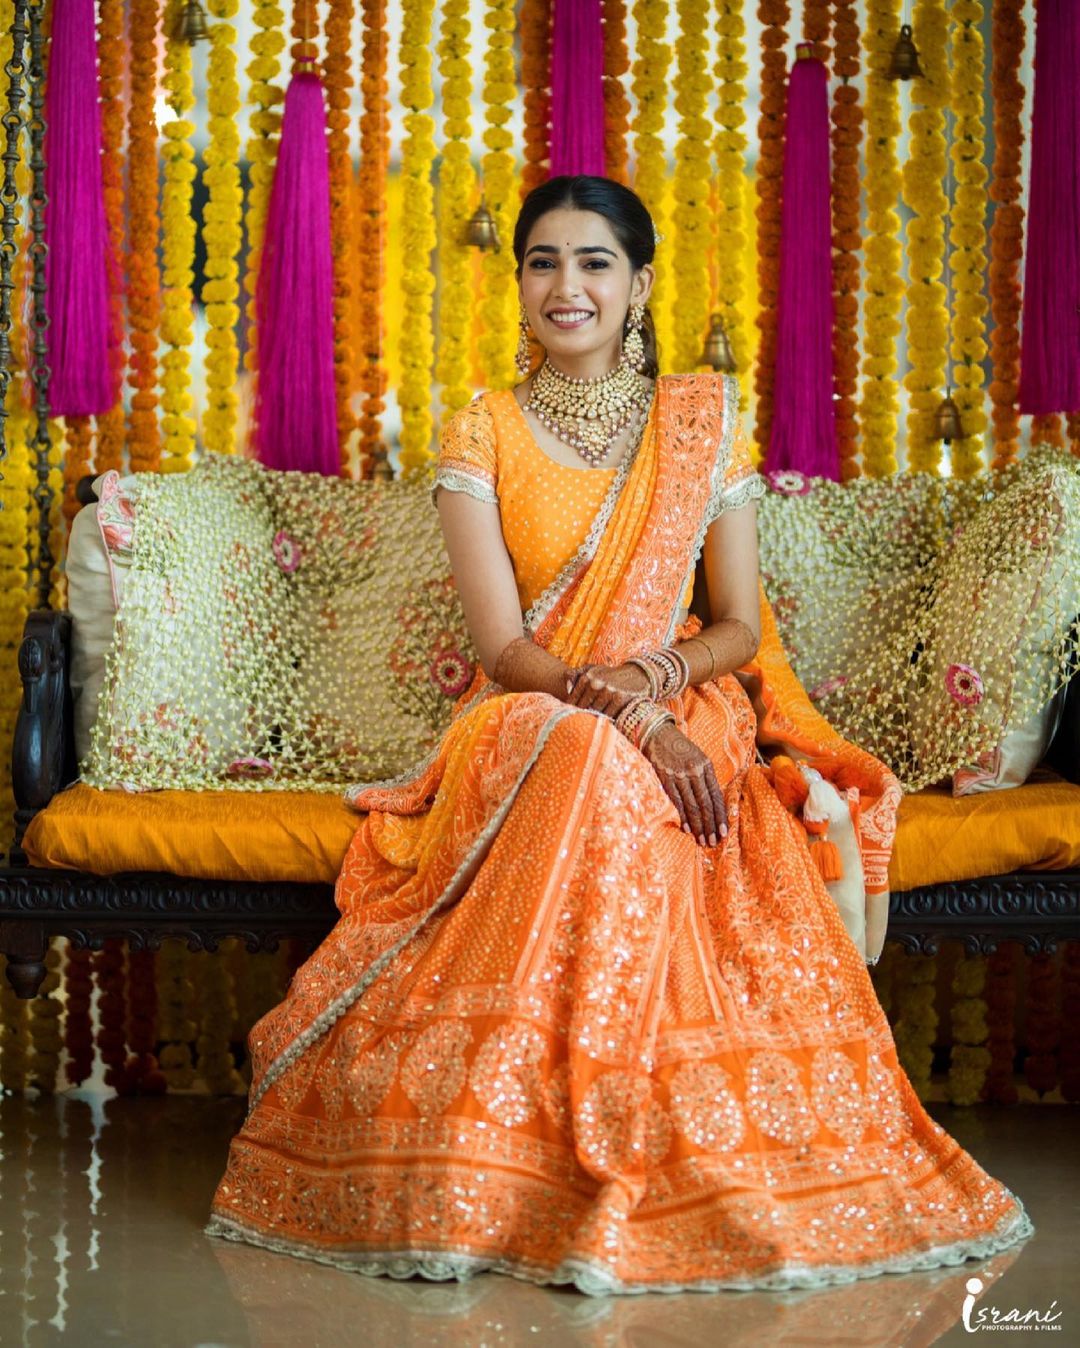 The Simple Yet Stunning Bride In The Bright Orange Hue Lehenga